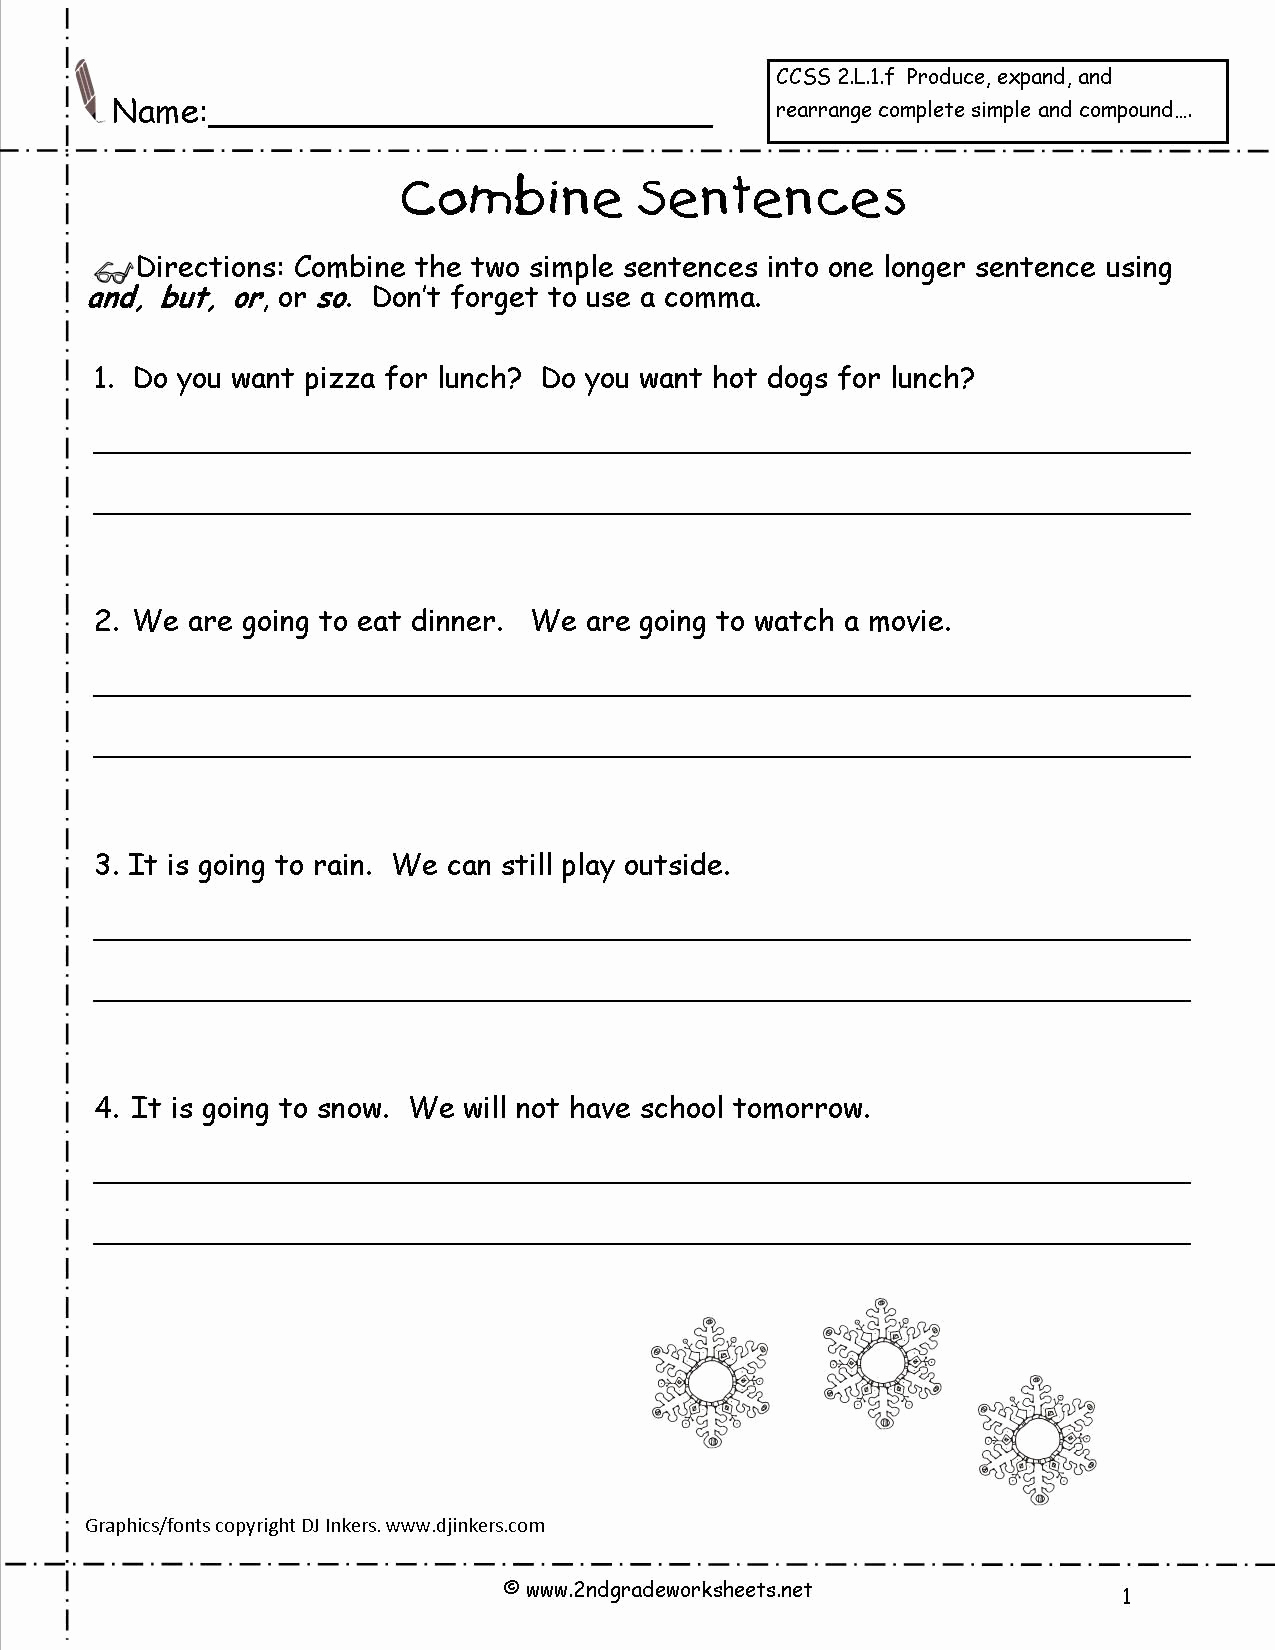 Scrambled Sentences Worksheets 3rd Grade Best Of 20 Scrambled Sentences Worksheets 3rd Grade